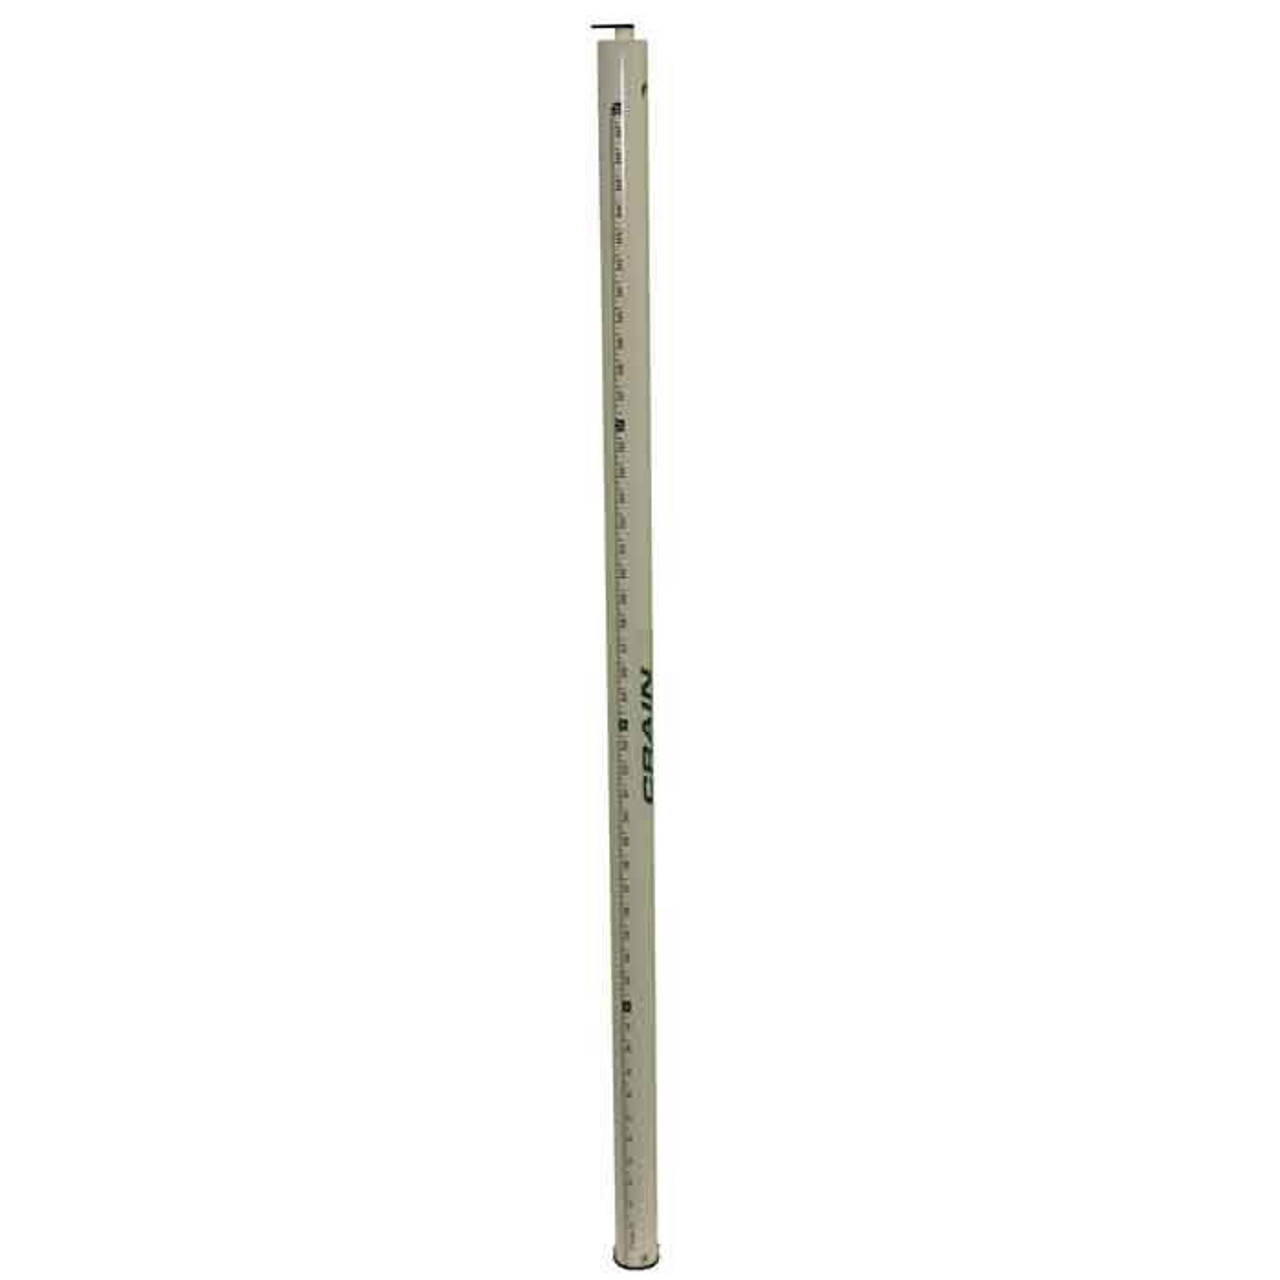 SECO 90180 Construction Measuring Ruler (CMR), 25-Foot (7.6 m)